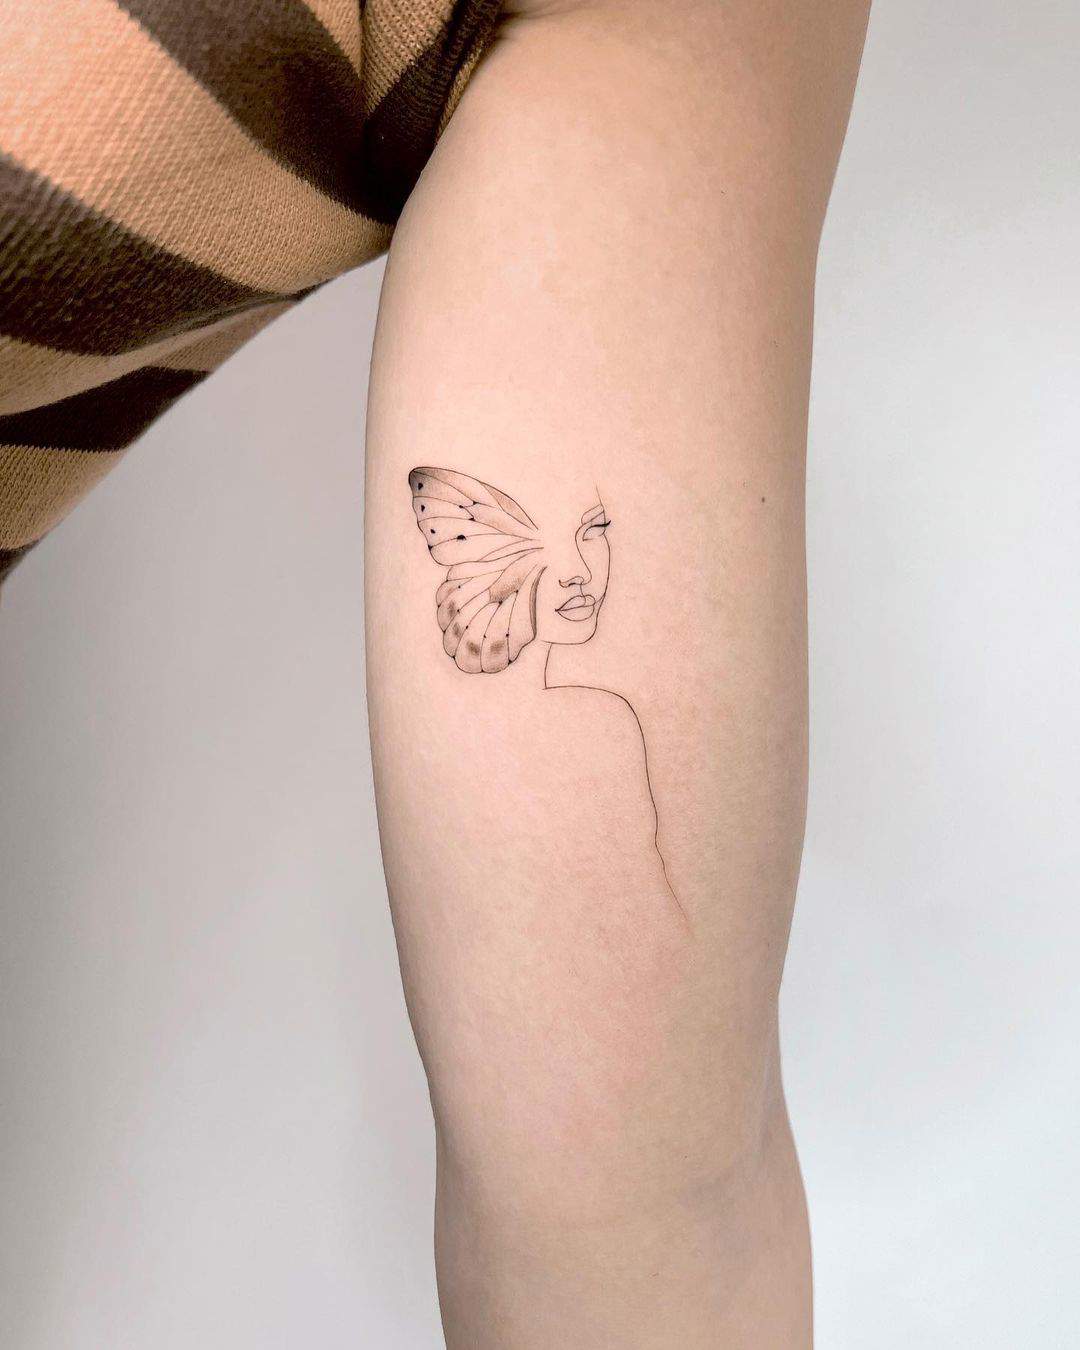 Tatuaje mitad mujer, mitad mariposa